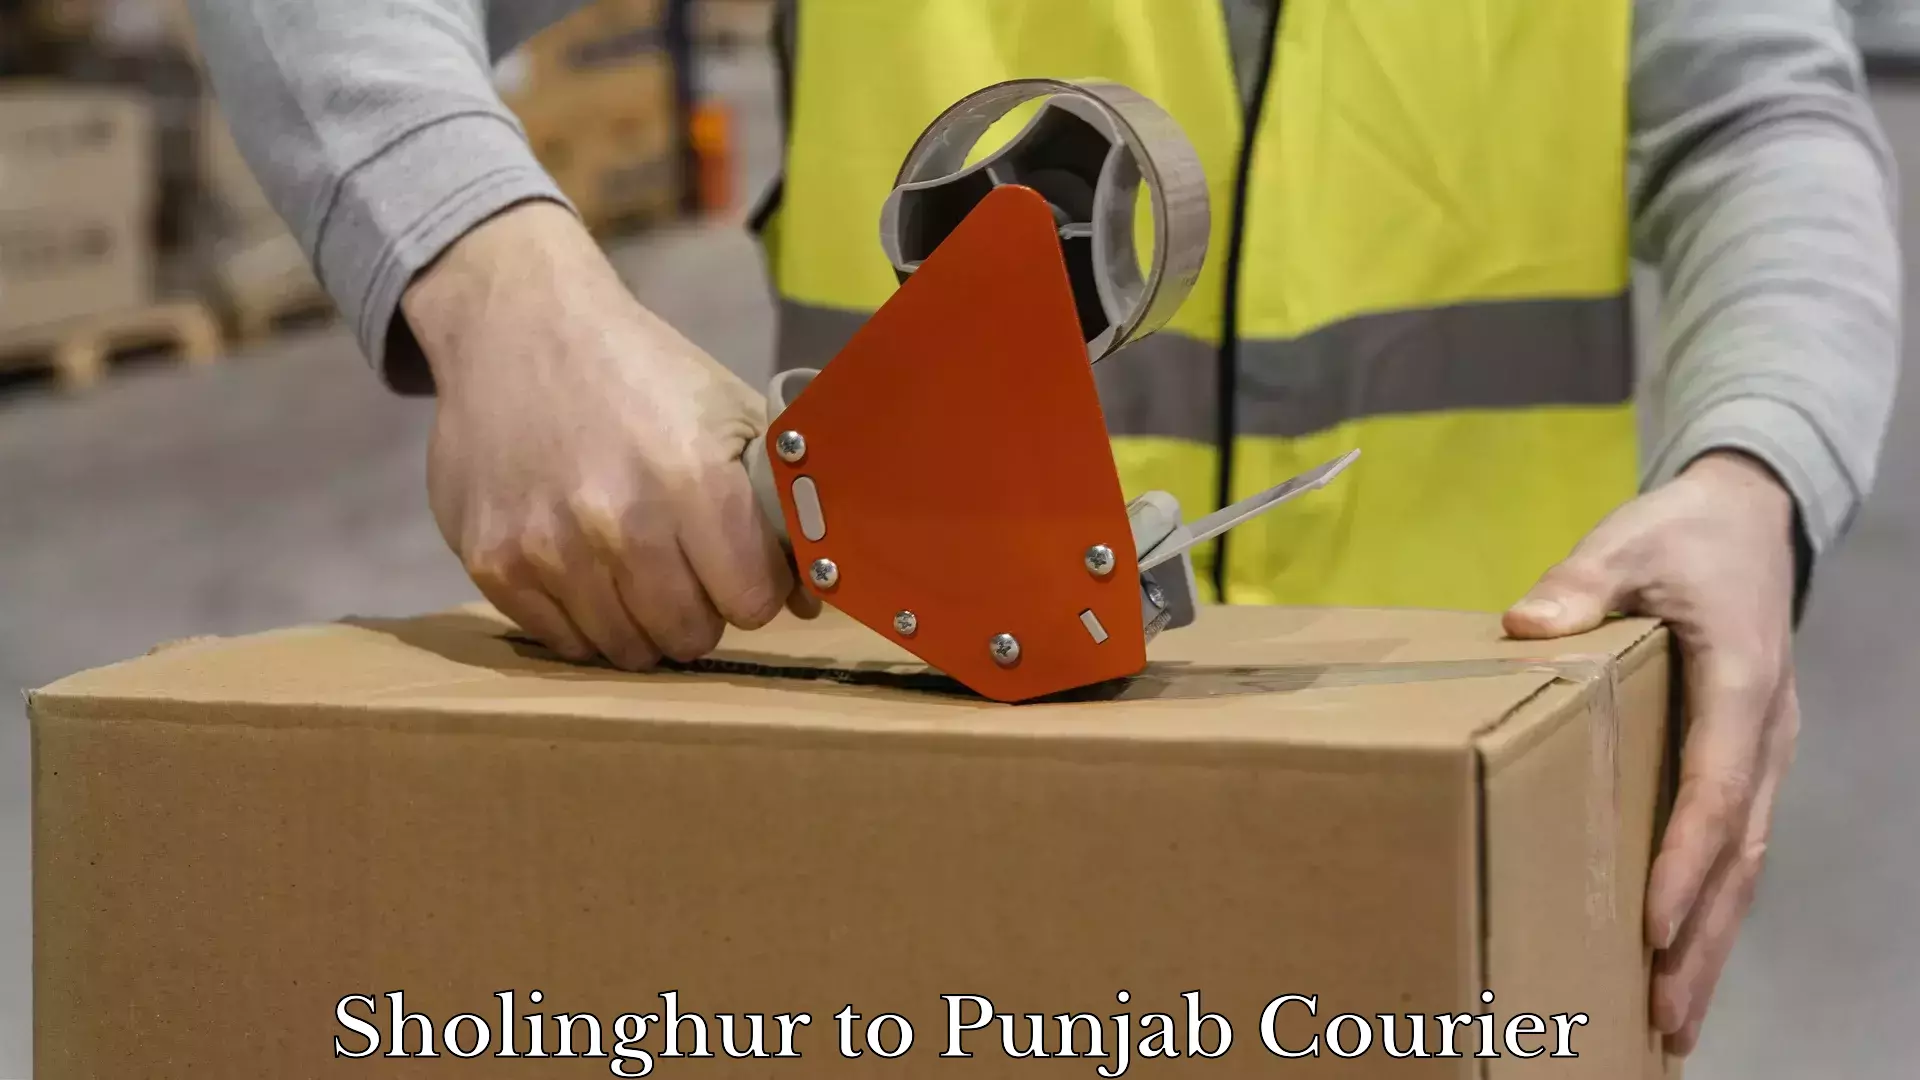 Furniture moving experts Sholinghur to Punjab